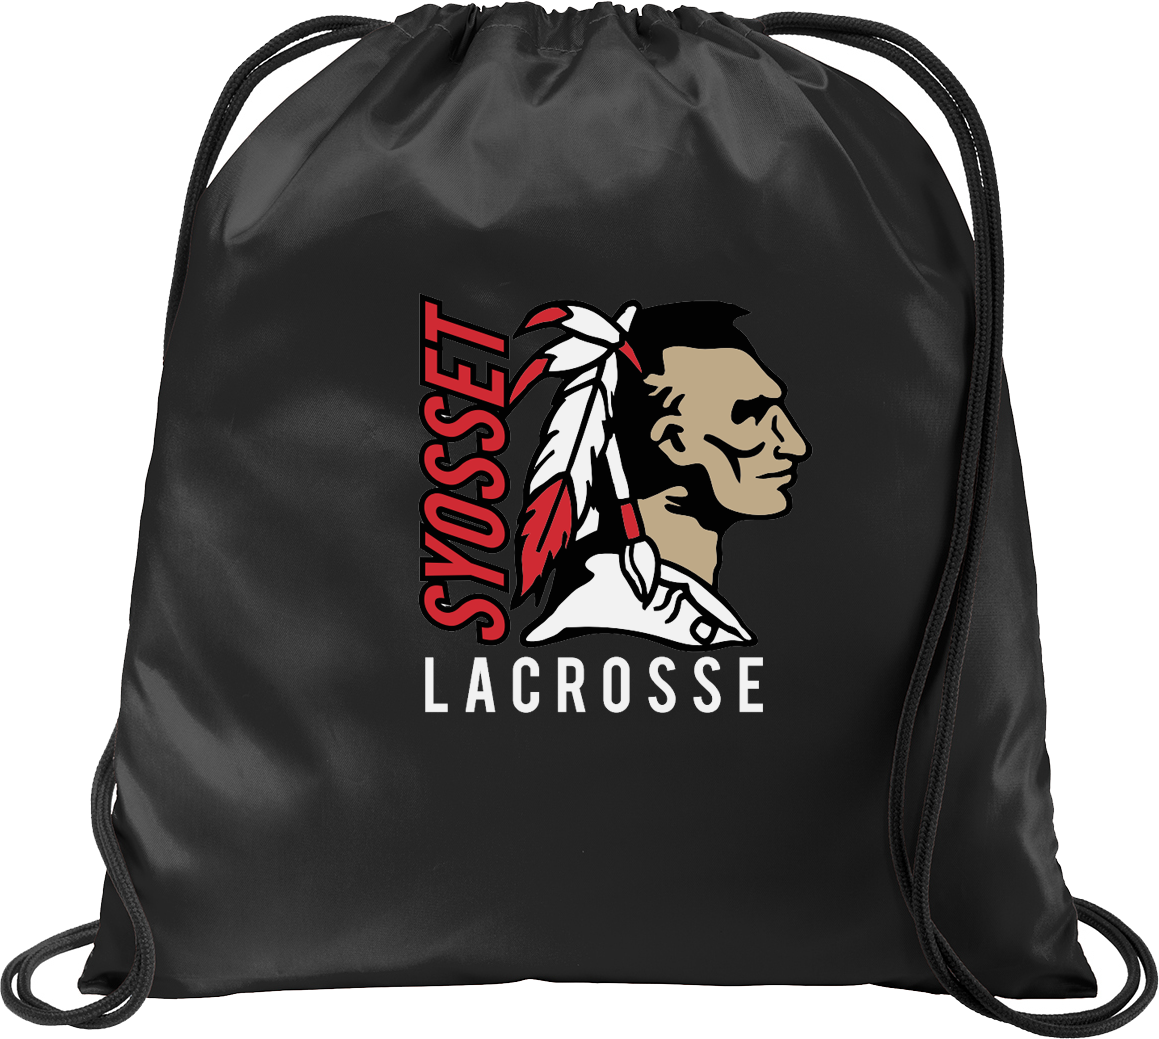 Syosset Lacrosse Cinch Pack